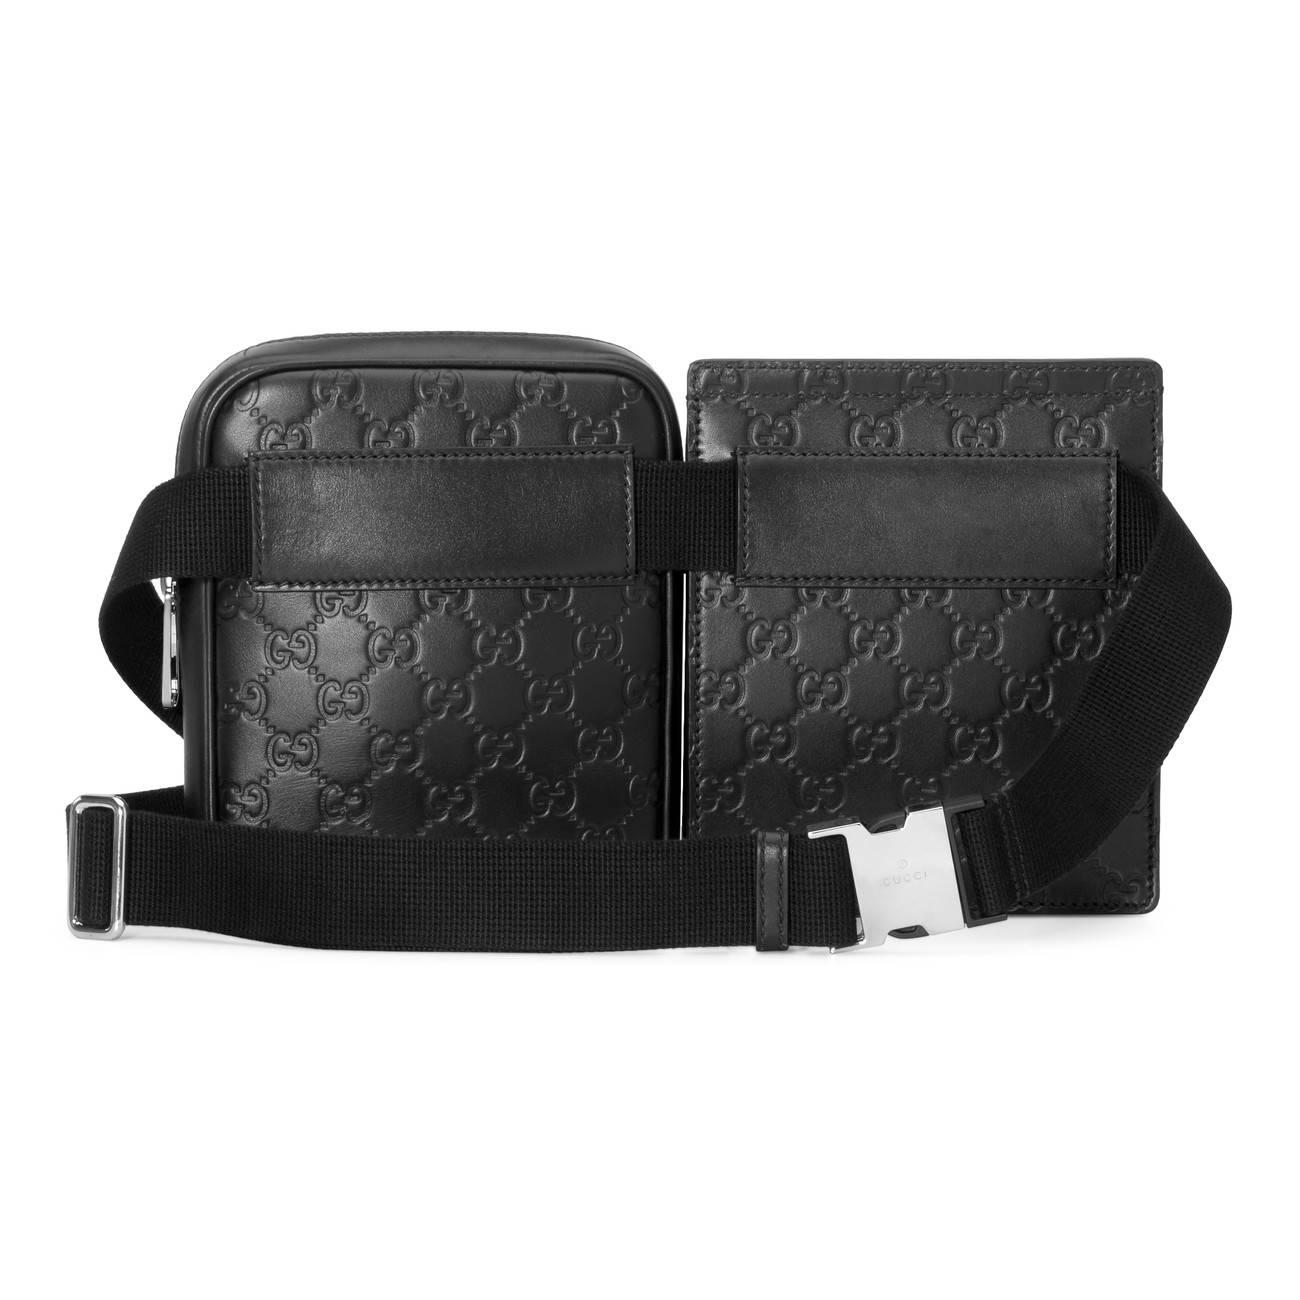 Gucci Leather Signature Belt Bag in Black for Men - Lyst